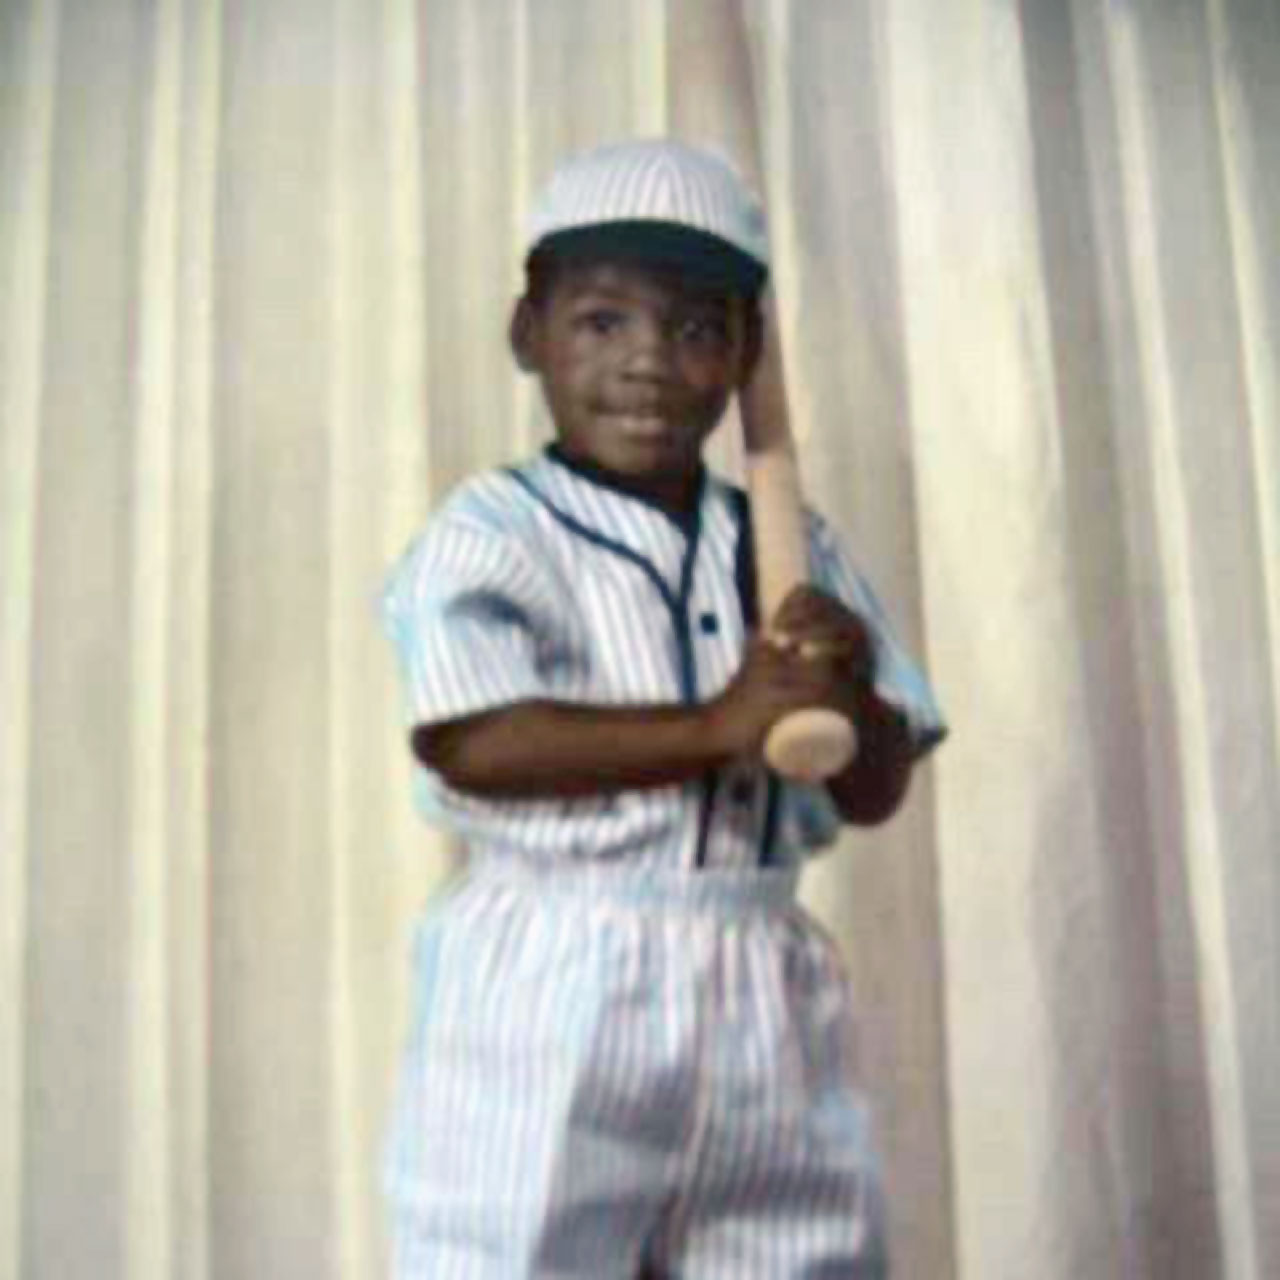 Barry Bonds in his first baseball uniform